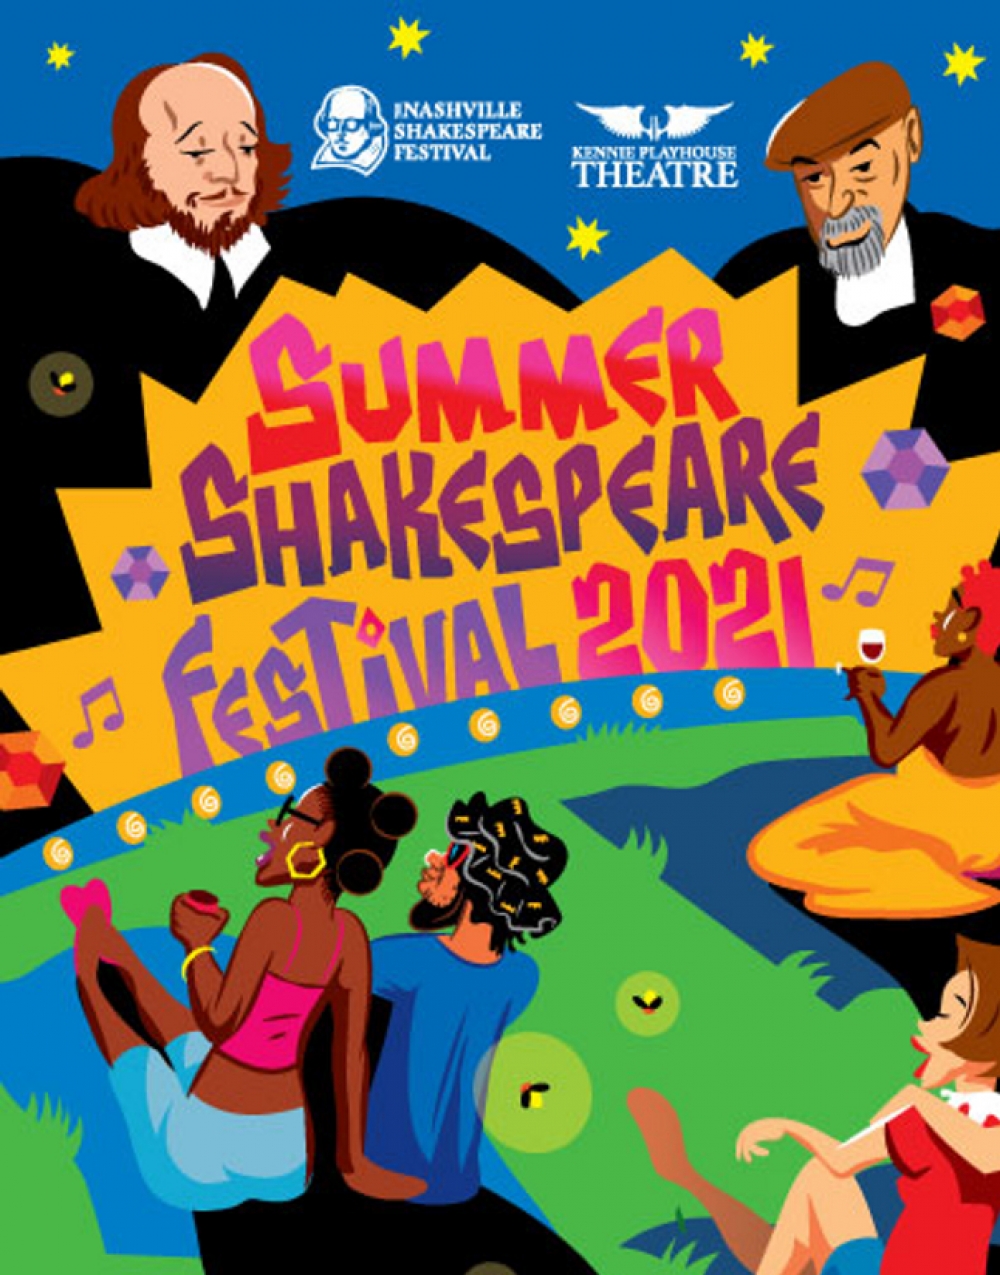 Summer Shakespeare 2021 - August Wilson's JITNEY at Kennie Playhouse Theatre